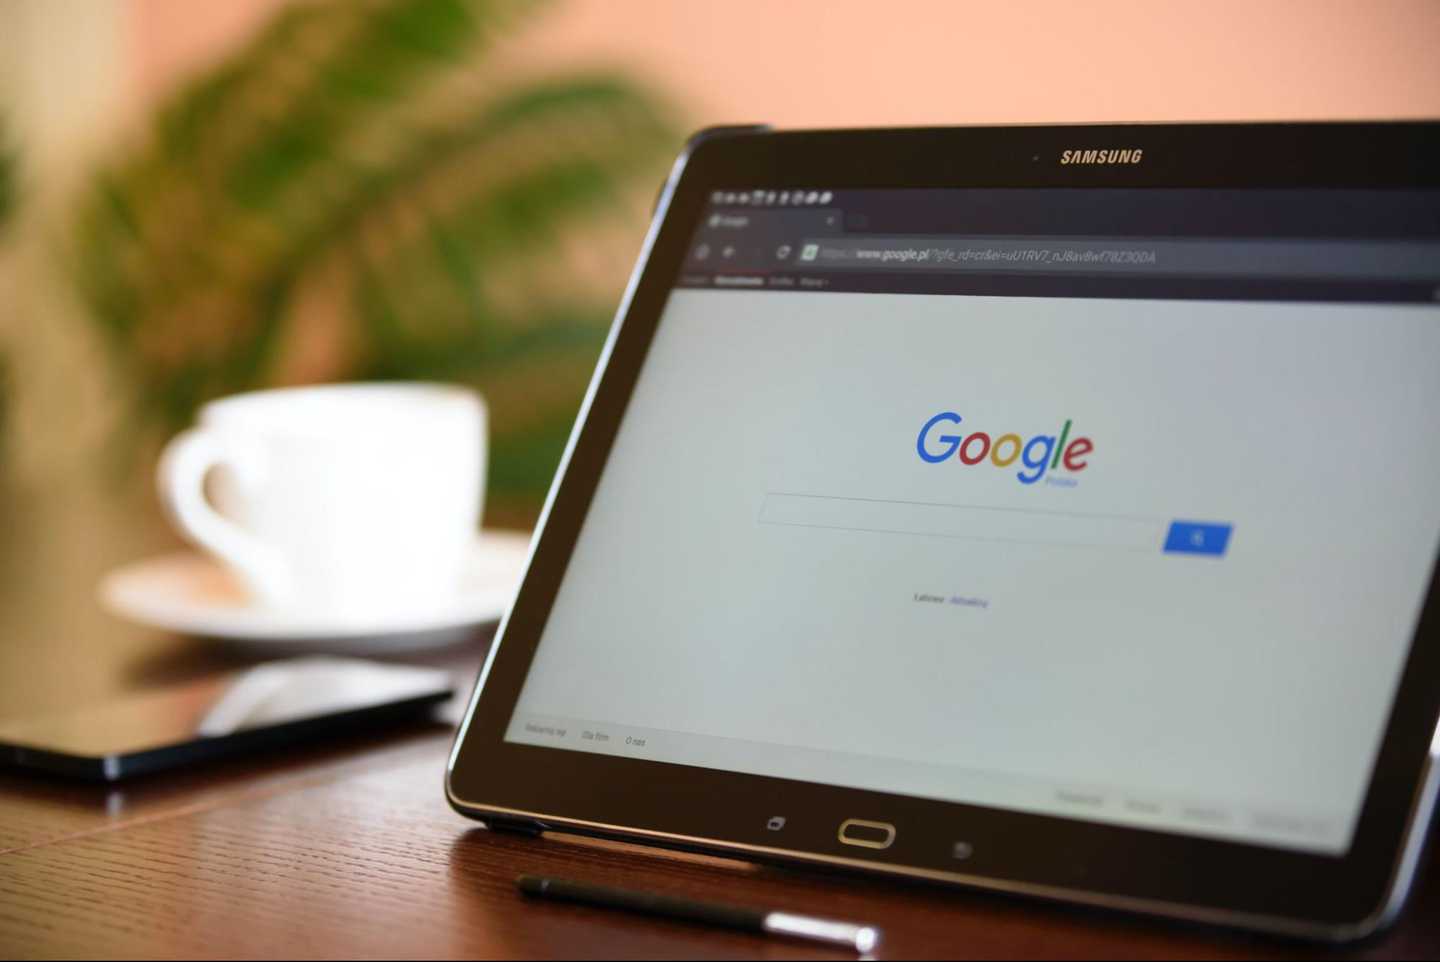 Google homepage in ipad screen and a phone and coffee mug beside